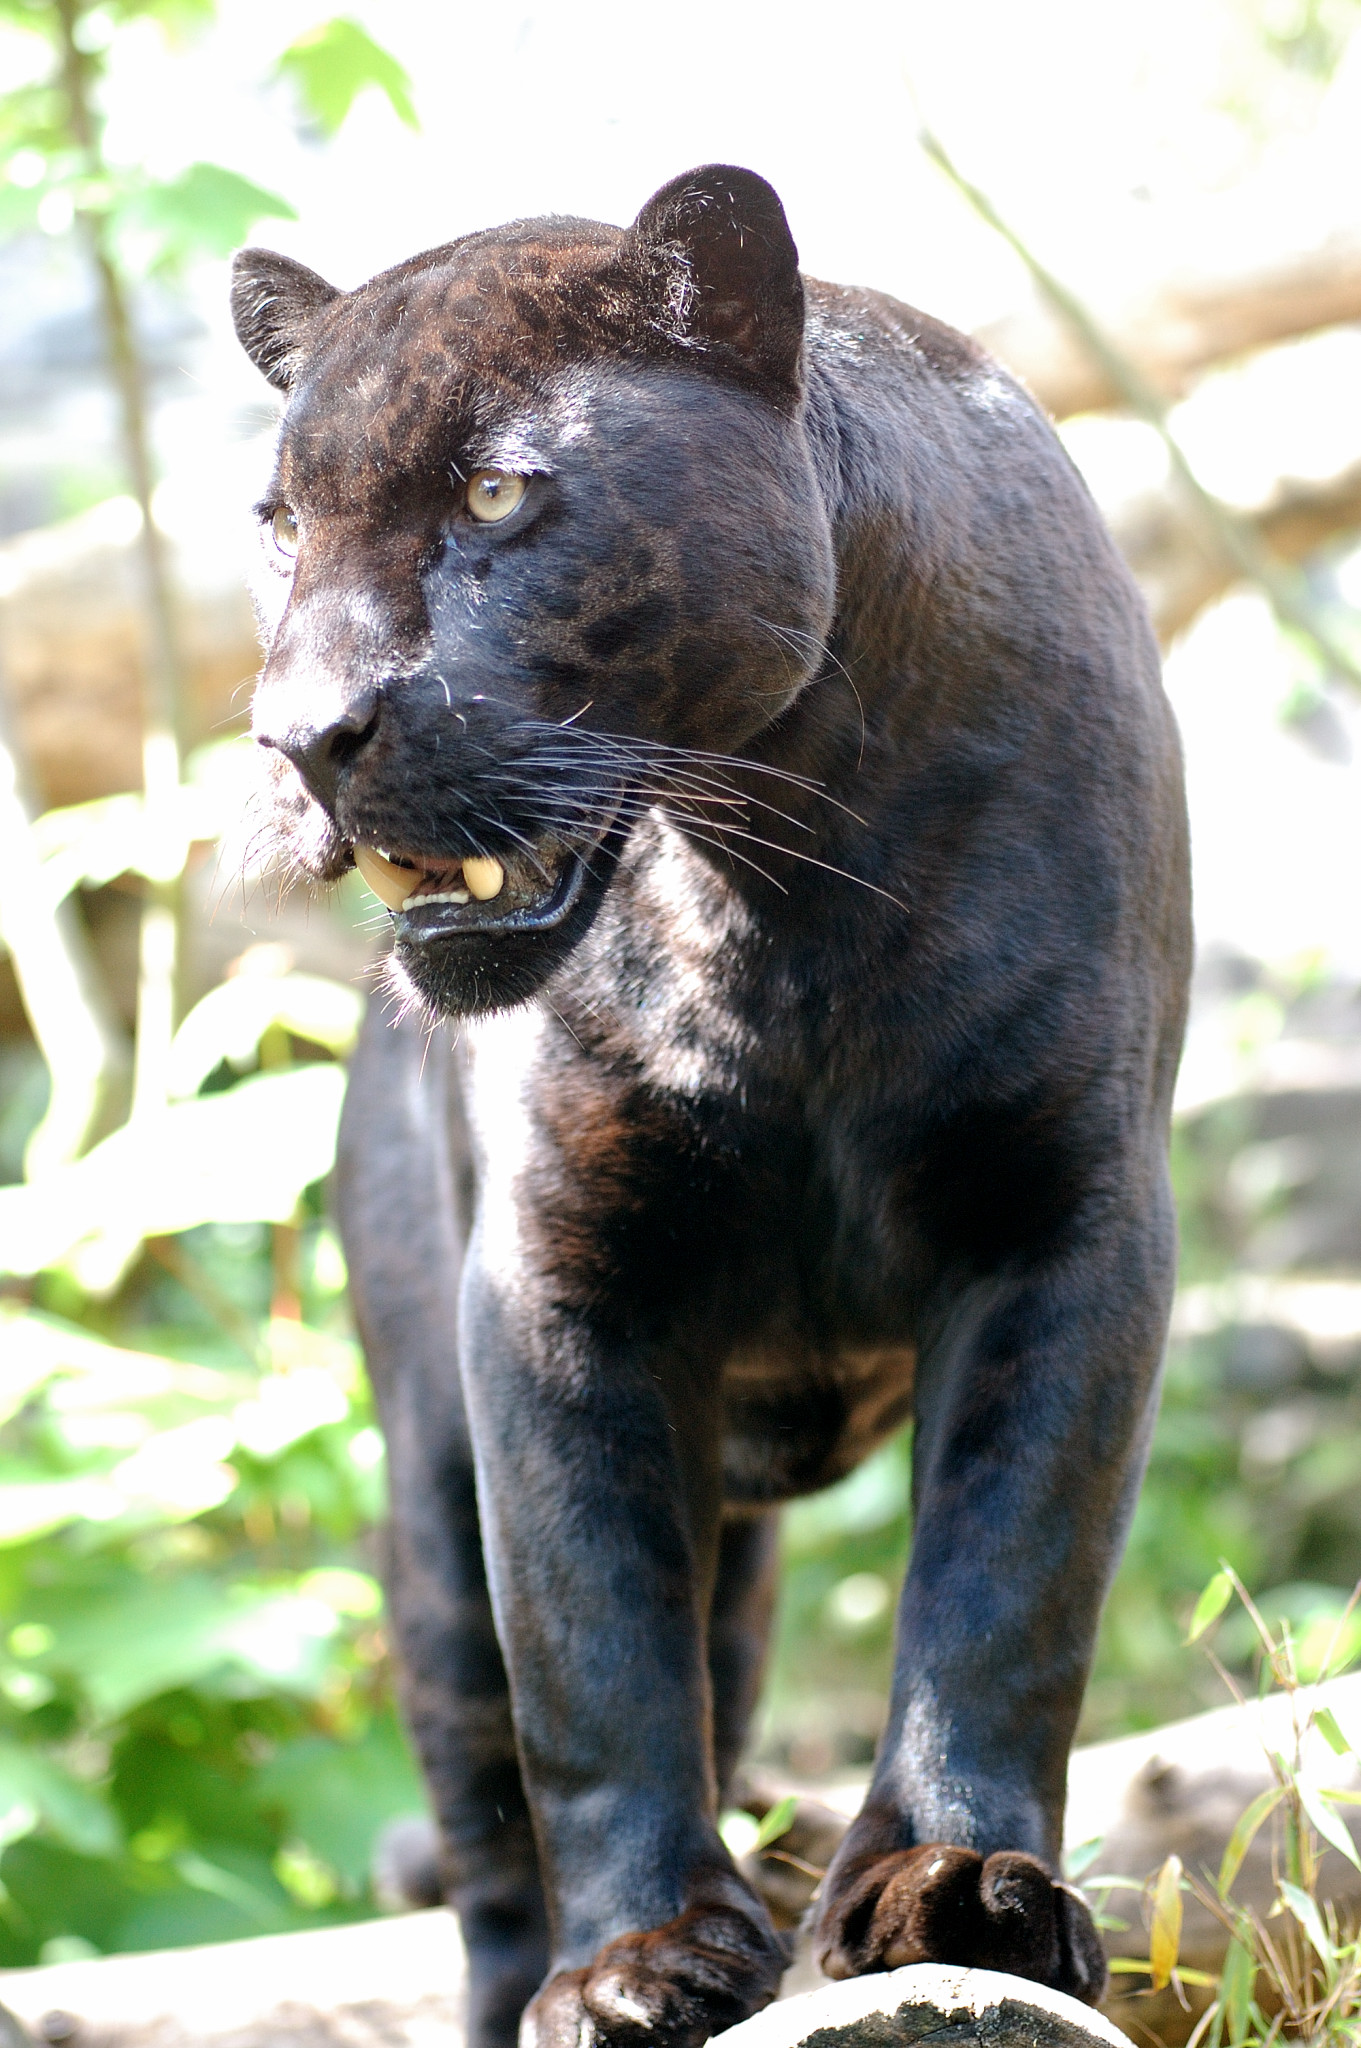 Panthere noire avatars